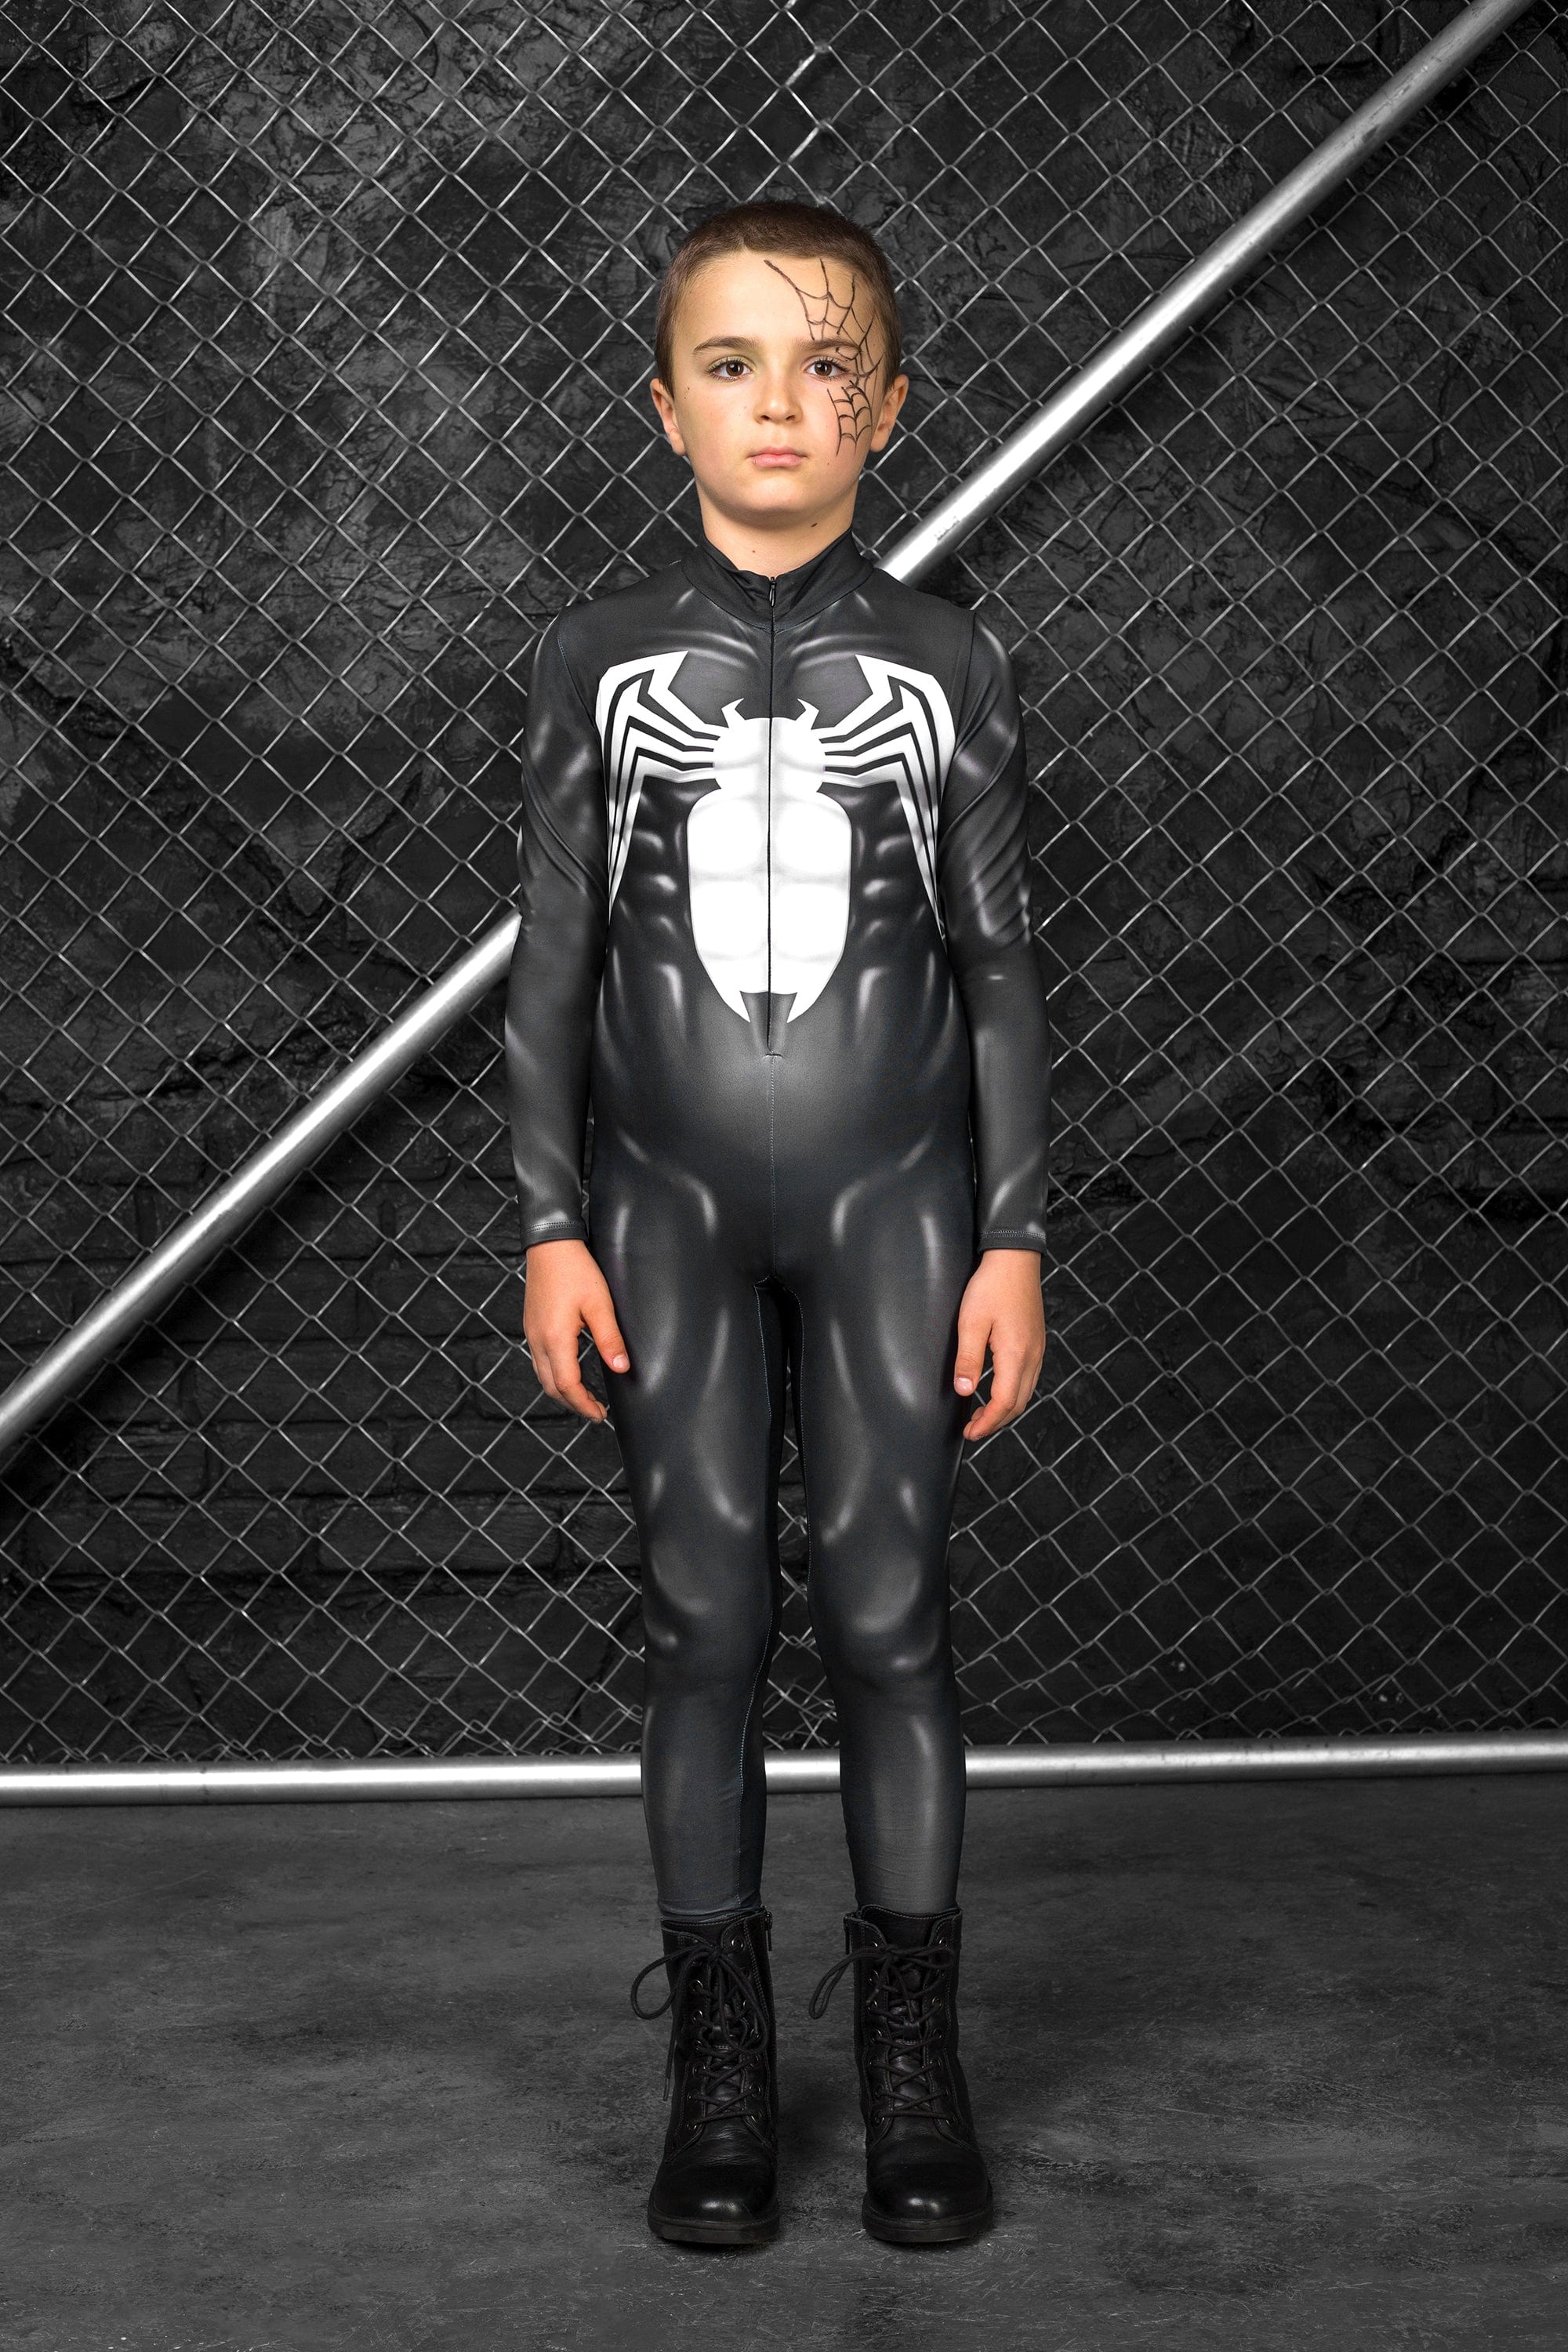 Venom Black Spider Boys Costume